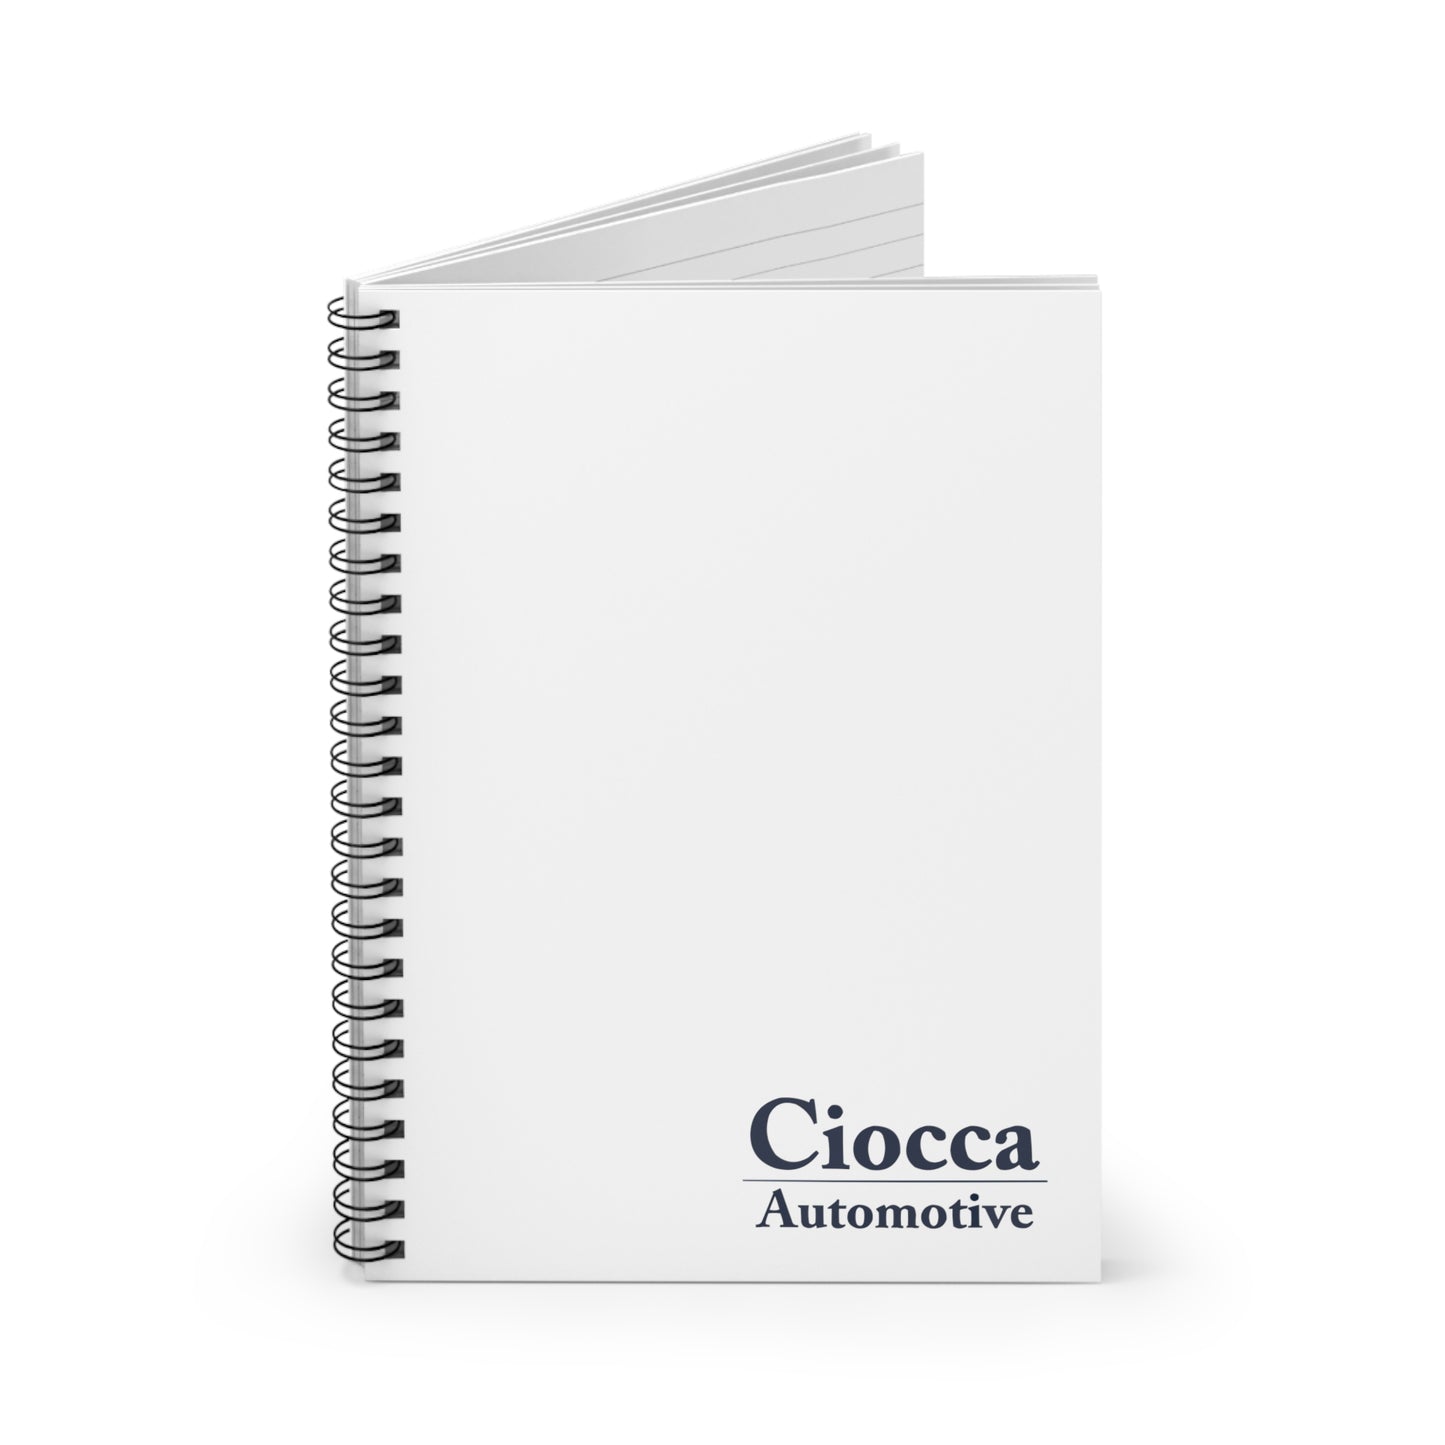 Spiral Notebook - Ruled Line - Ciocca